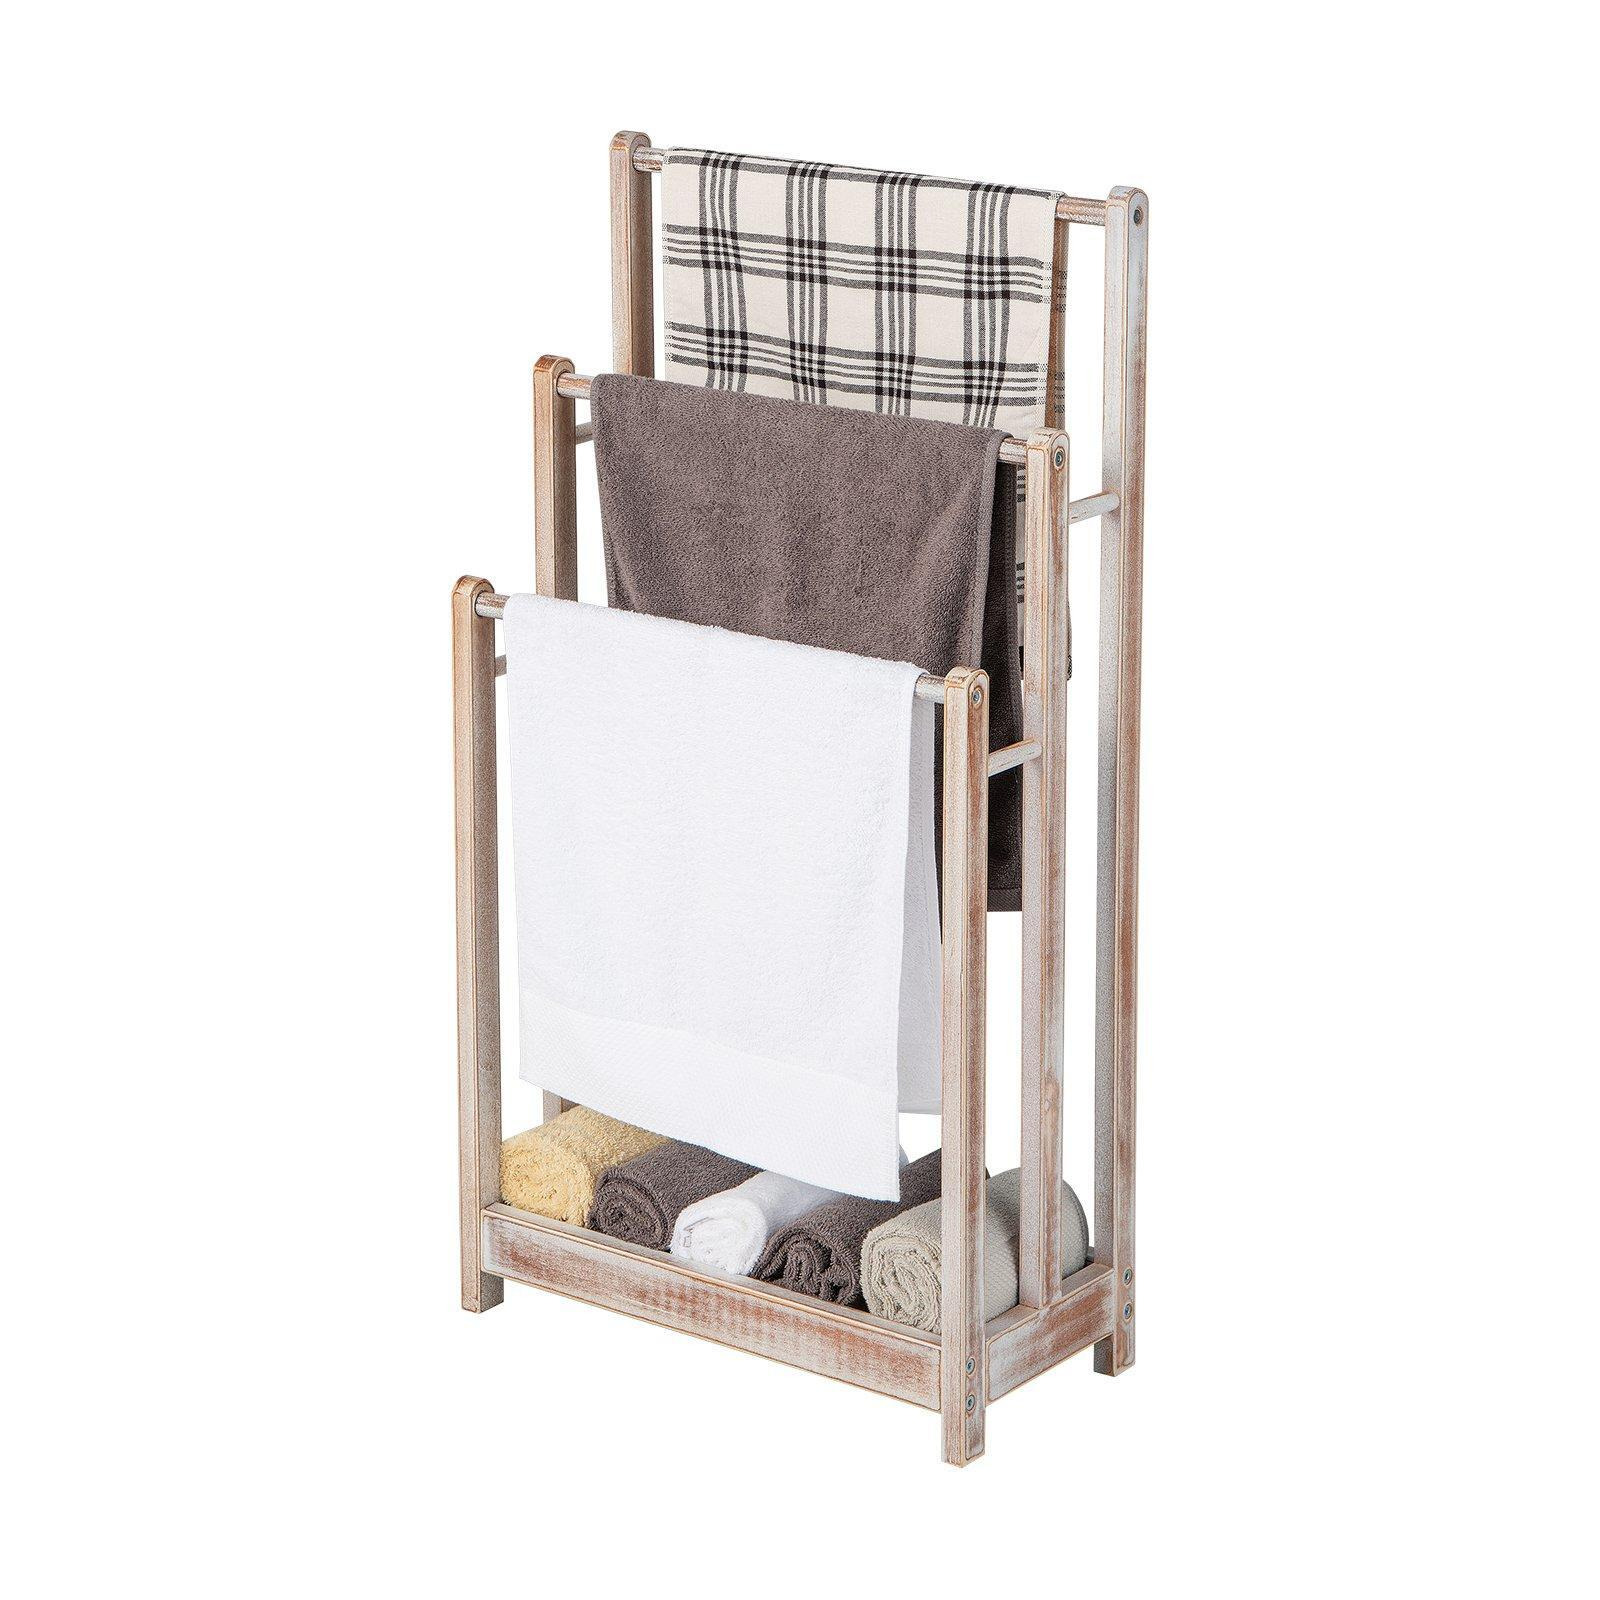 Freestanding 3-tier Wood Towel Rack Bathroom Towel Drying Stand - image 1